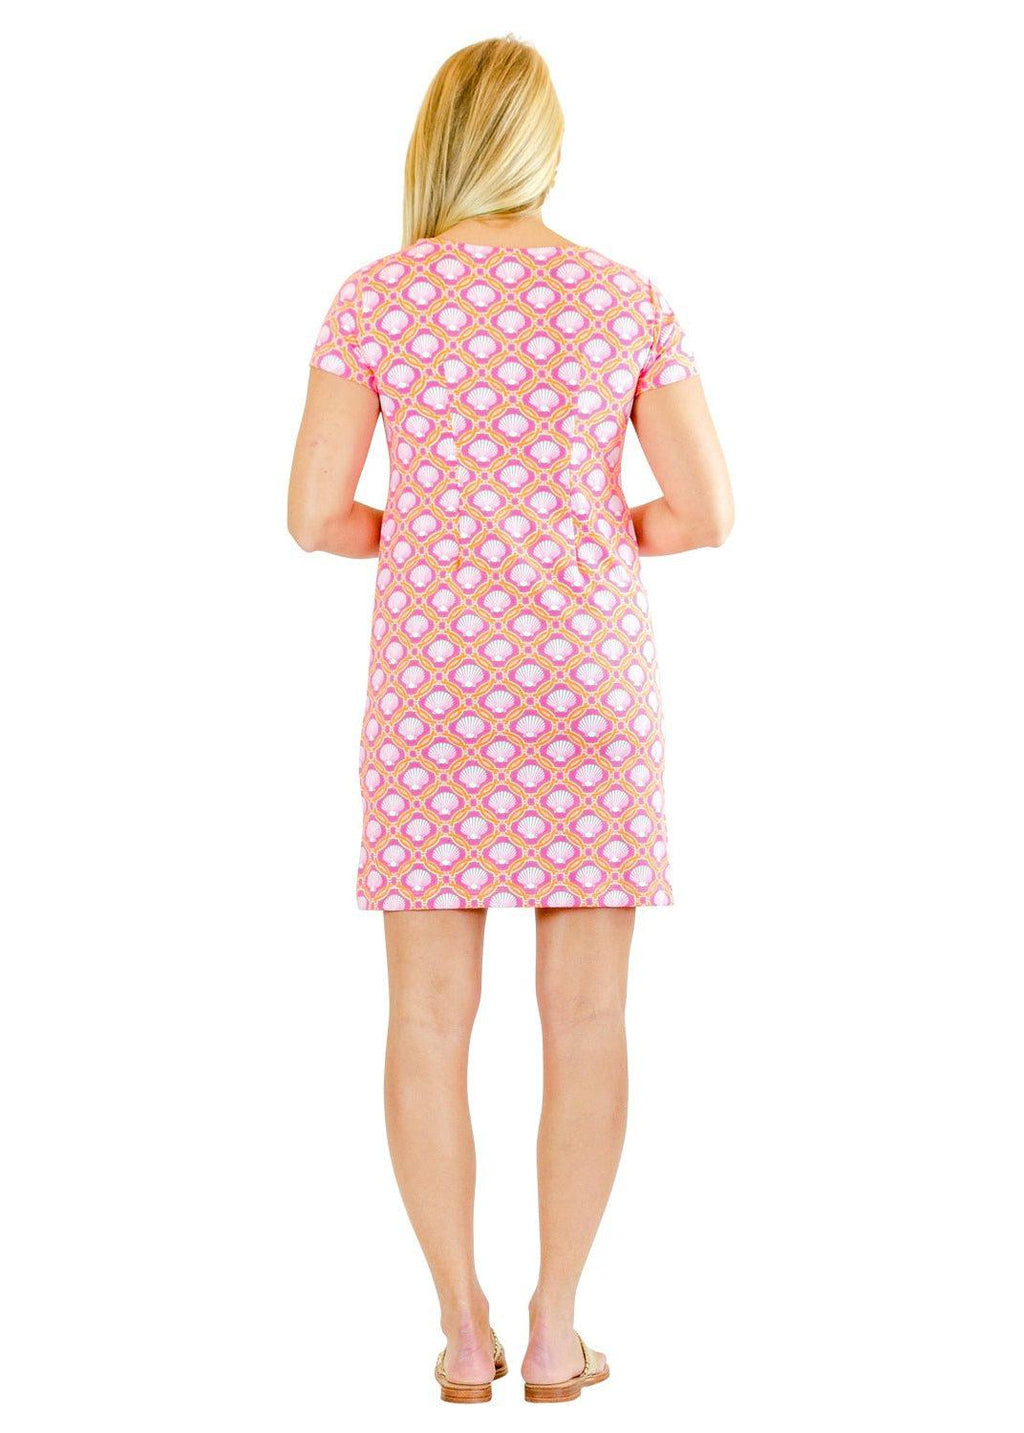 Marina Dress - Bamboo Circles Pink/Orange - FINAL SALE-2